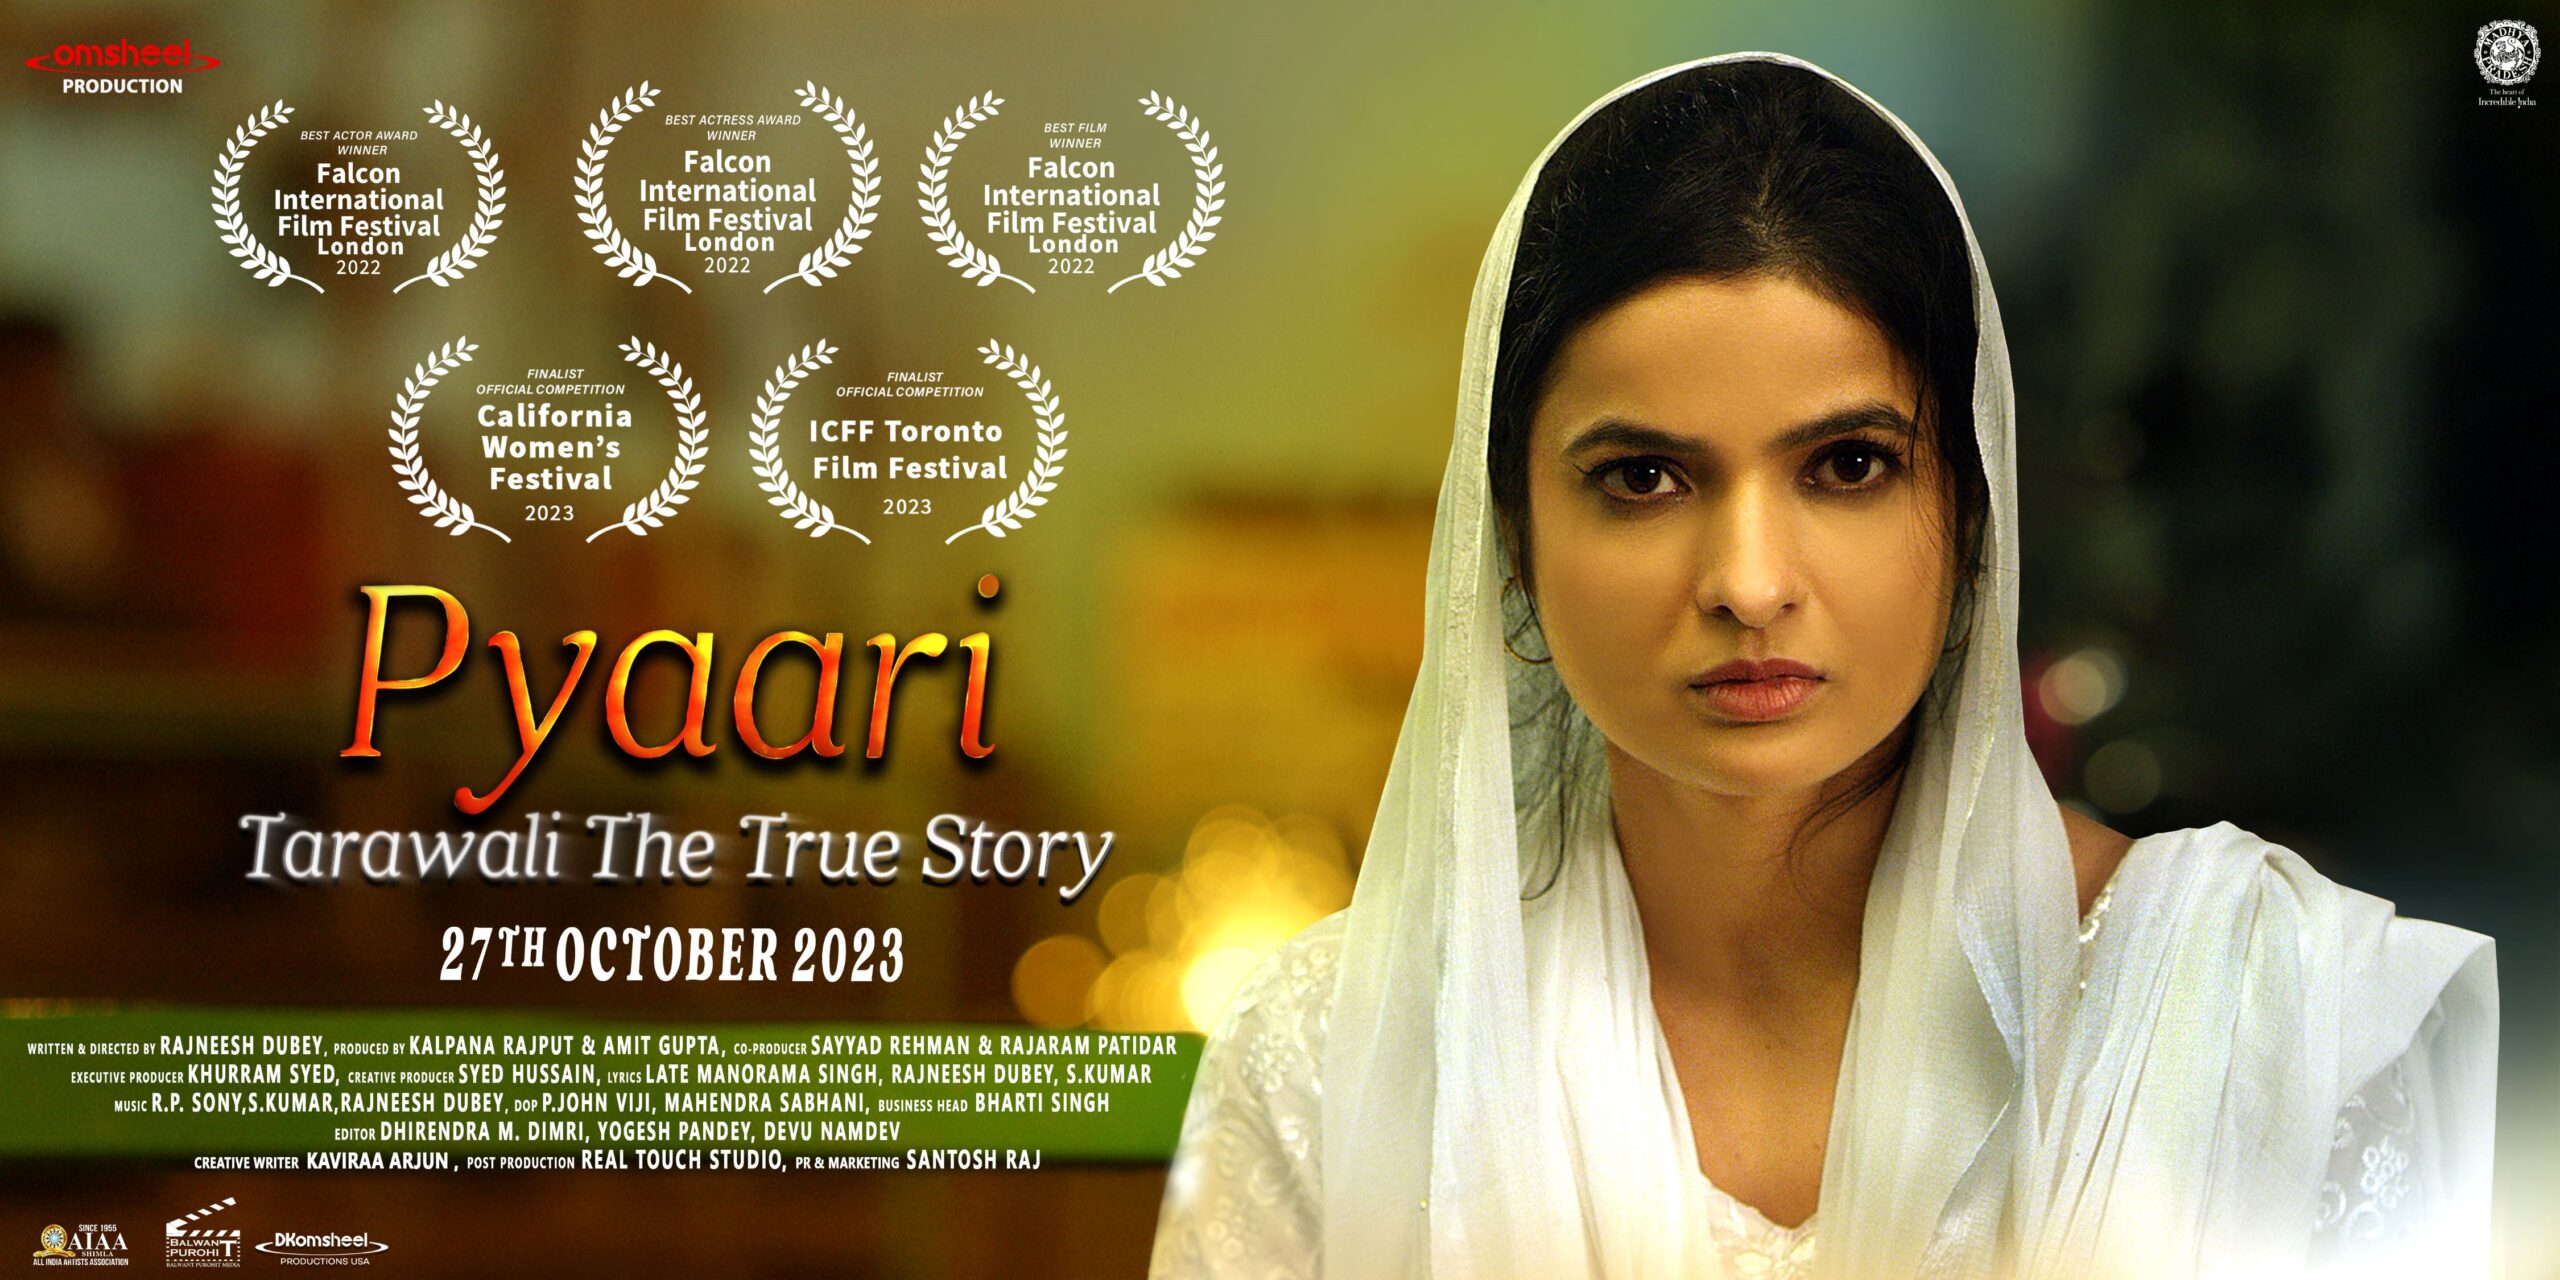 Dolly Tomar's dialogue in the teaser of the film "Pyaari Tarawali" increased curiosity